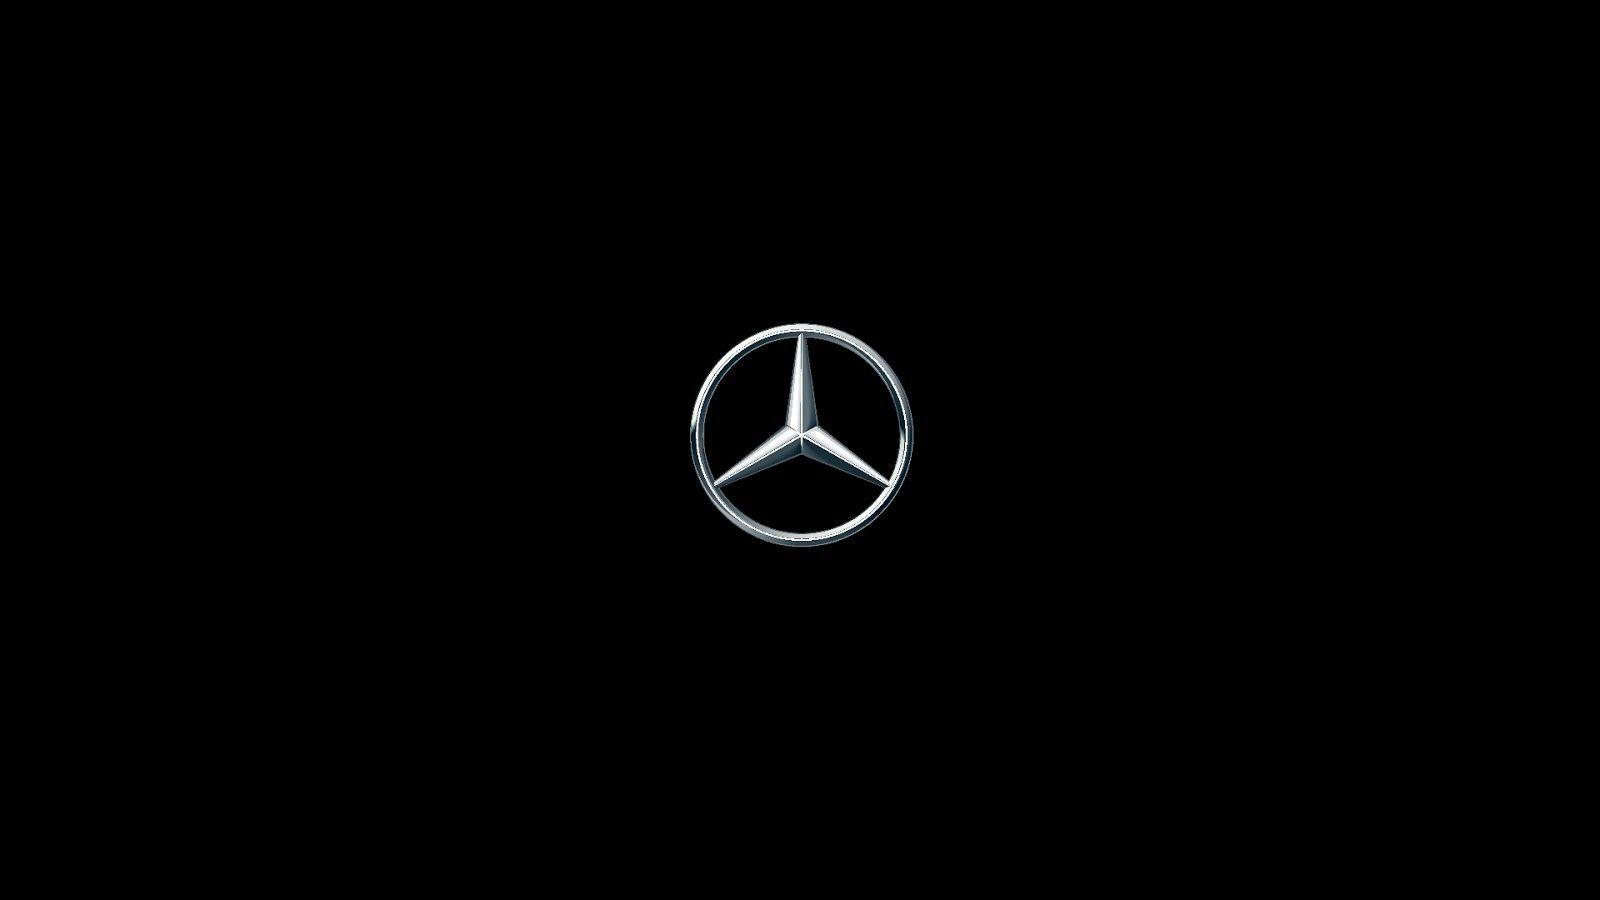 Benz Black Logo - Mercedes Benz logos in black background Mercedes Benz Logos